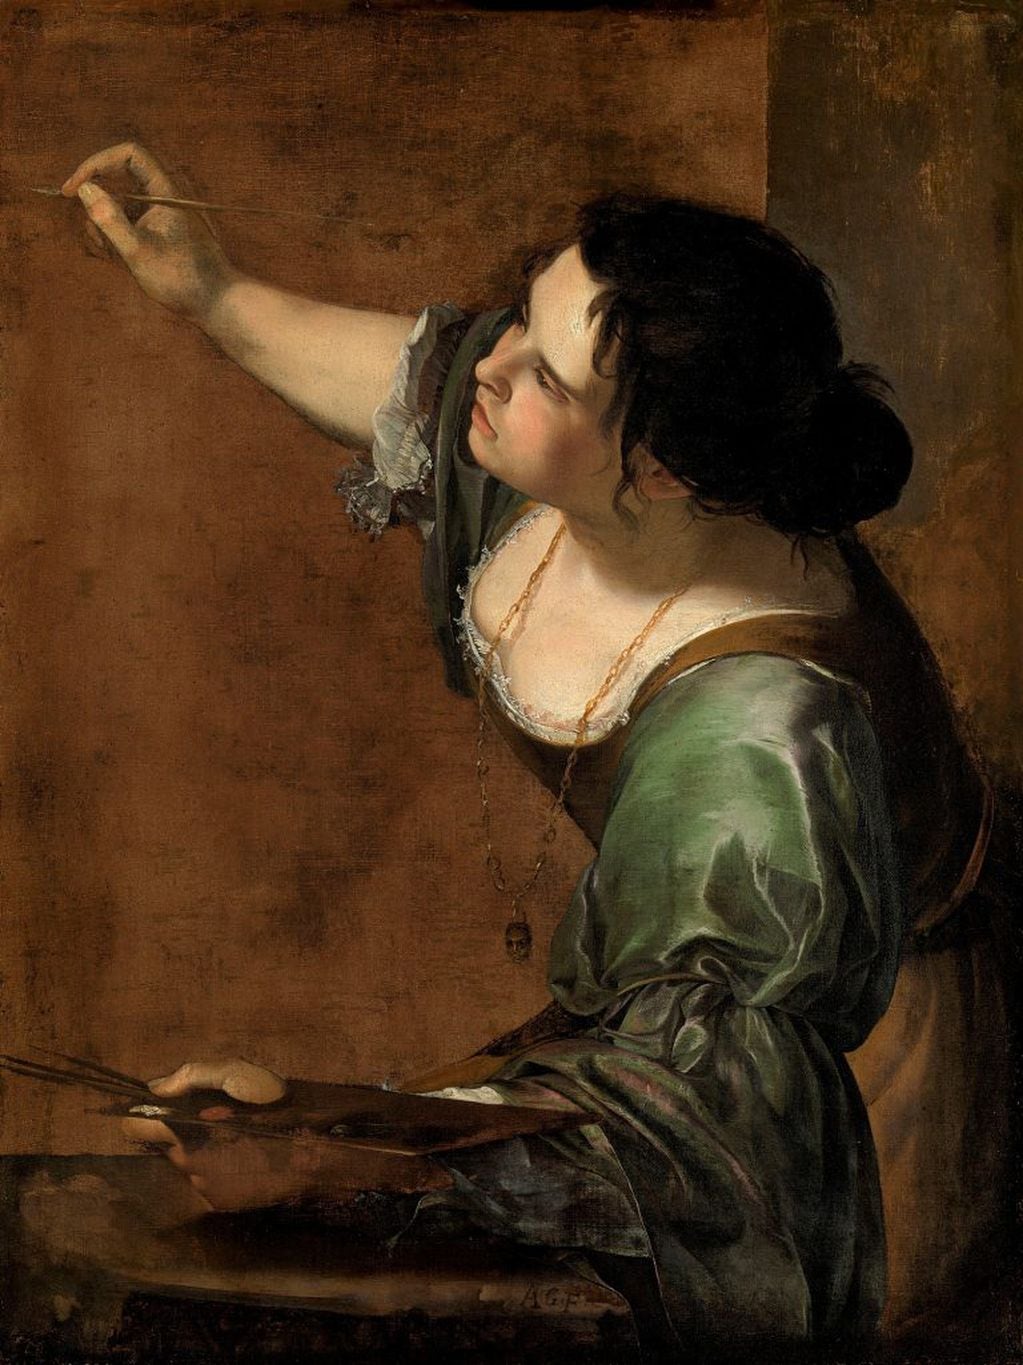 Autorretrato de Artemisia Gentileschi - Google Cultural Institute.